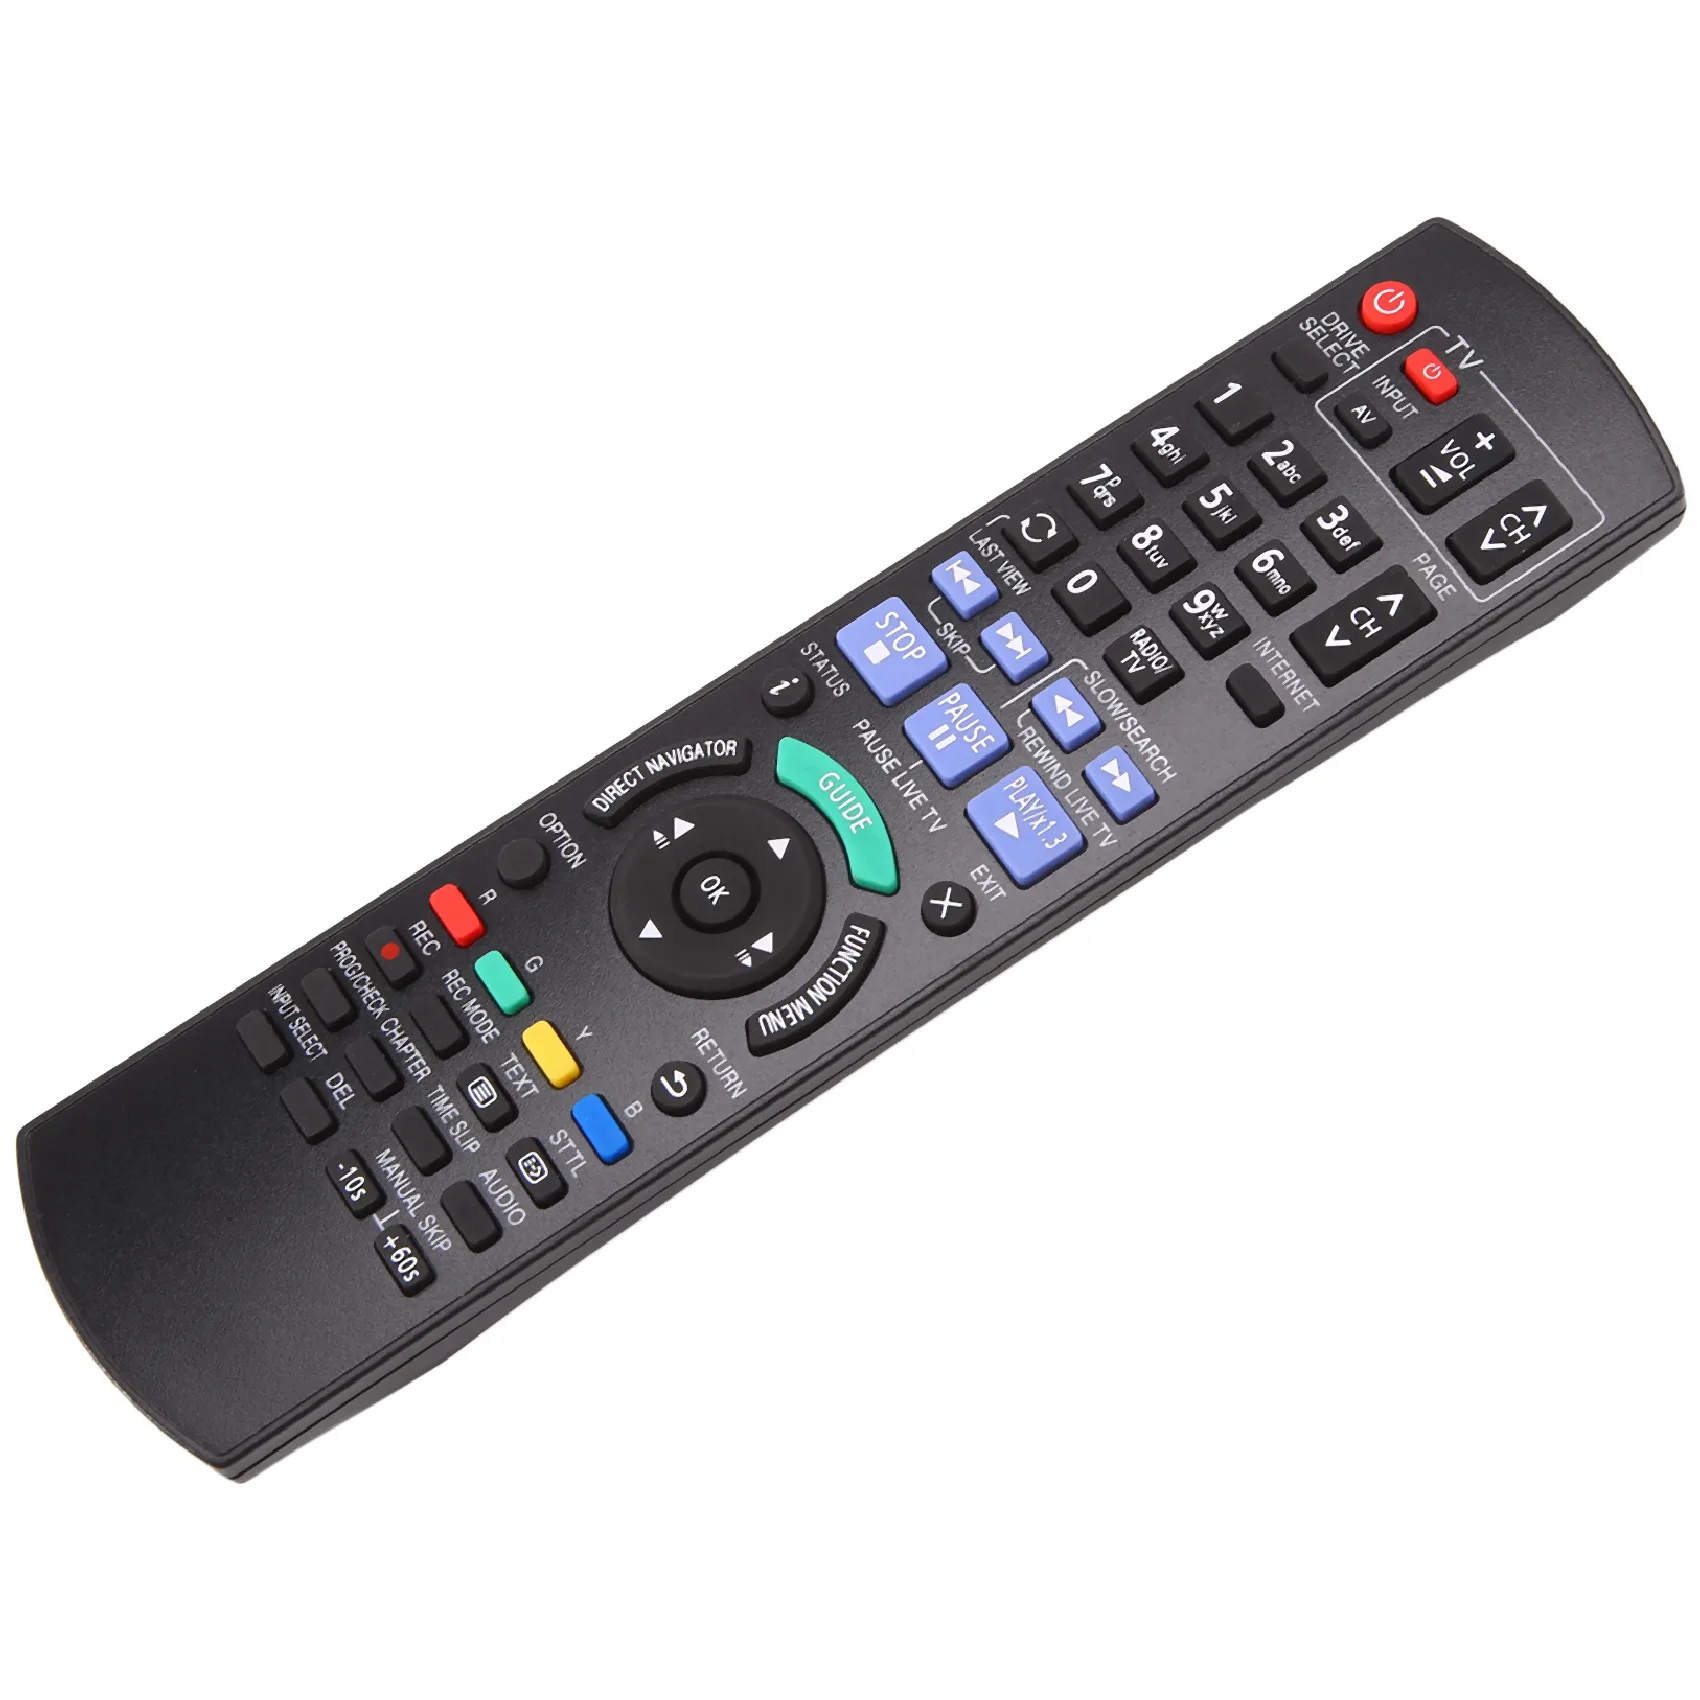 

Remote Control Smart Remote N2QAYB000980 for Panasonic Blu-Ray DVD Player Remote Control